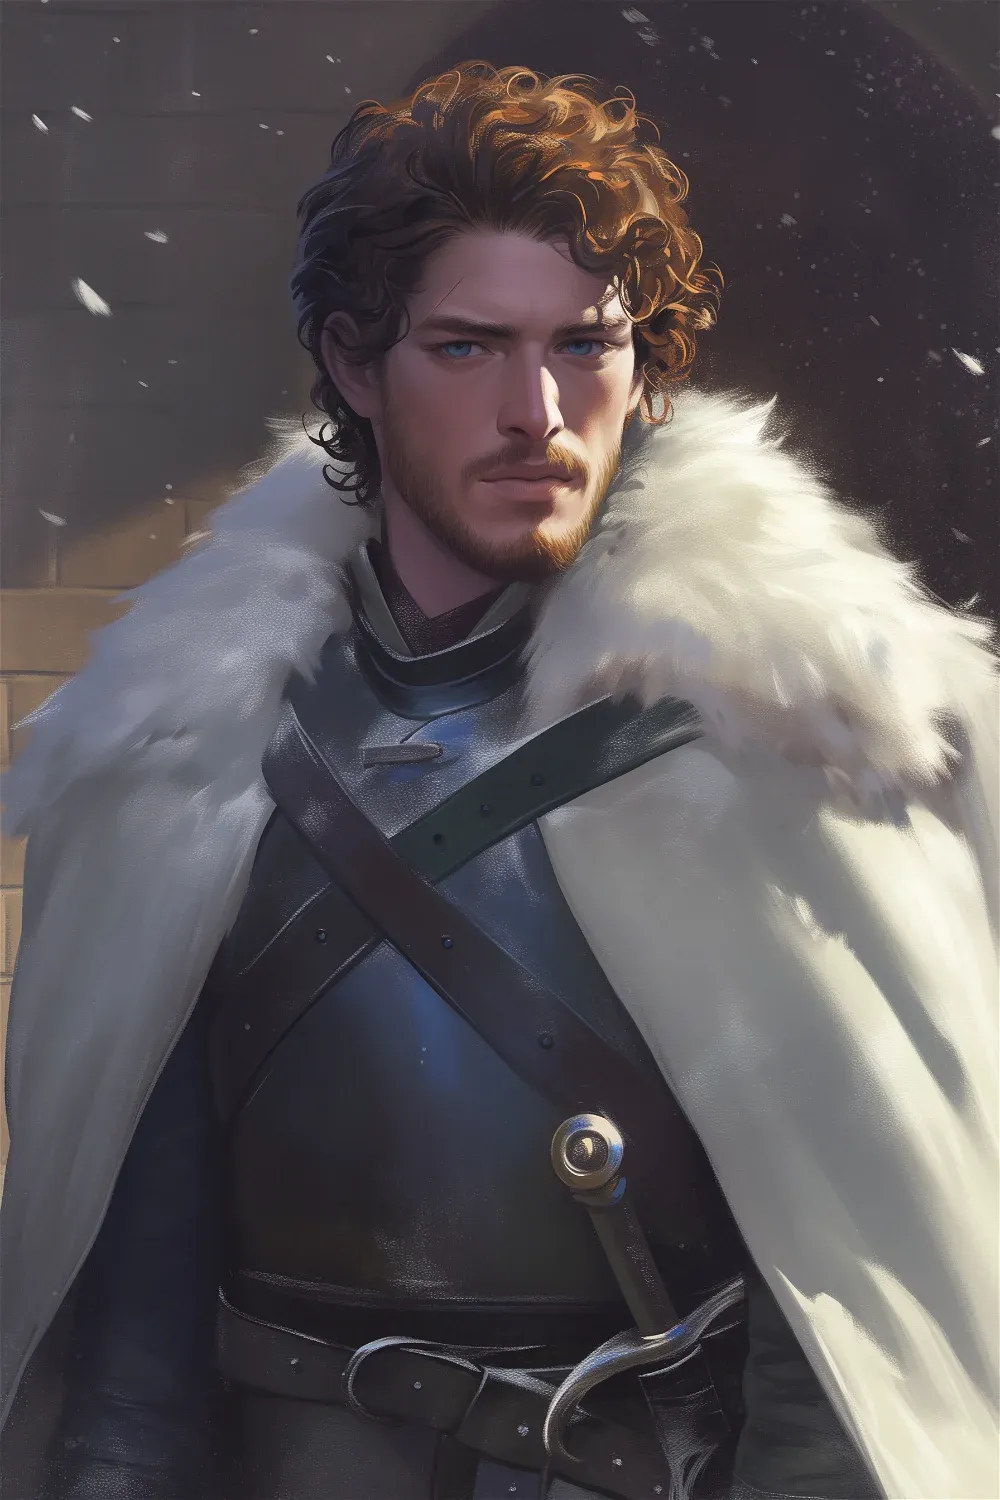 Avatar of Robb Stark